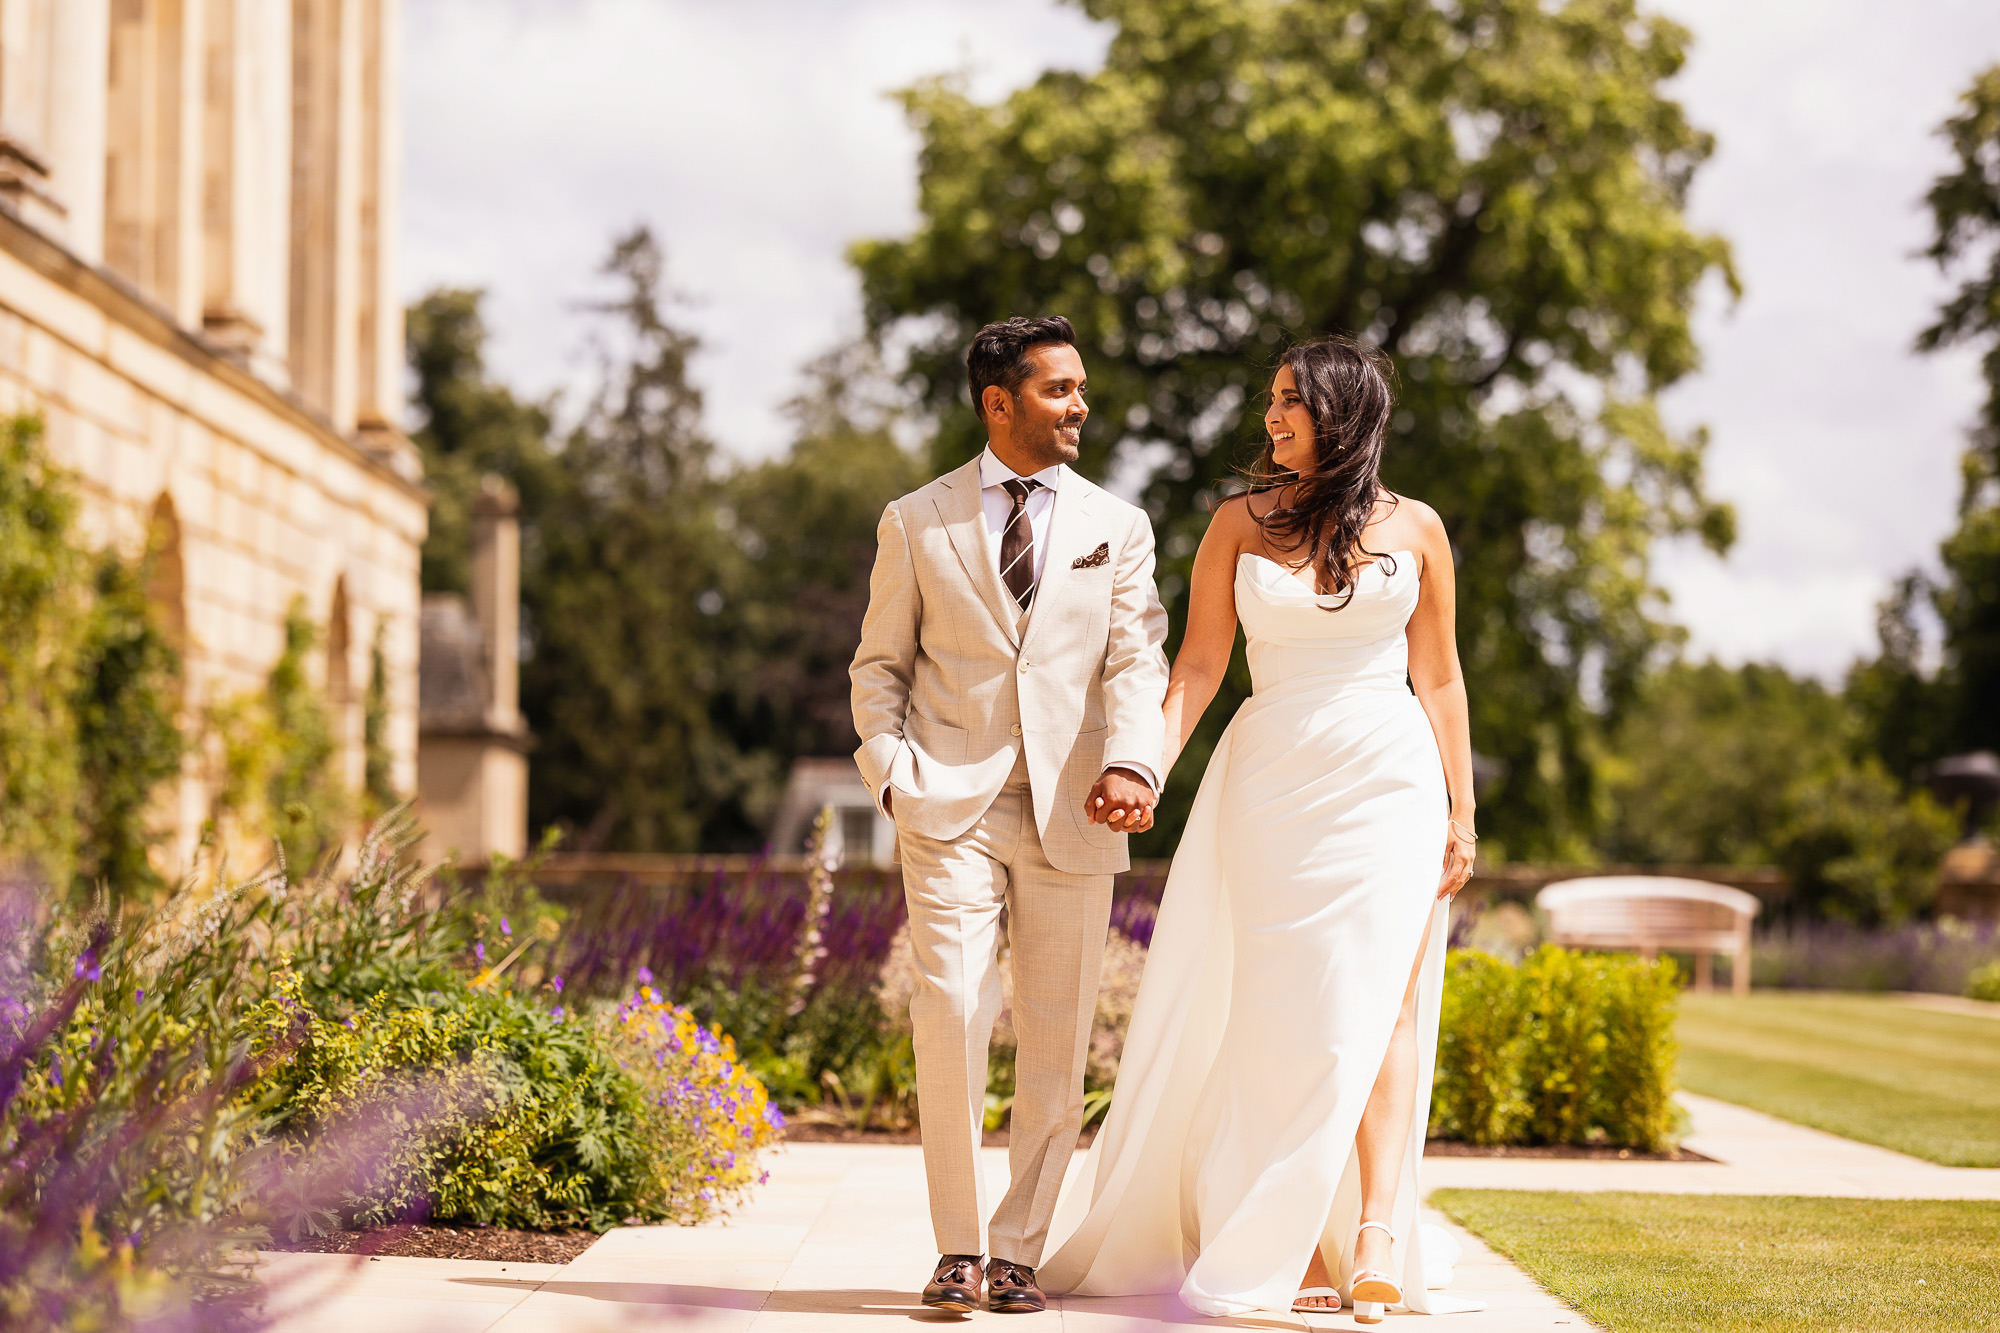 Stowe House, Civil Ceremony, Hindu Wedding, Multicultural Wedding Photographer, couples portraits